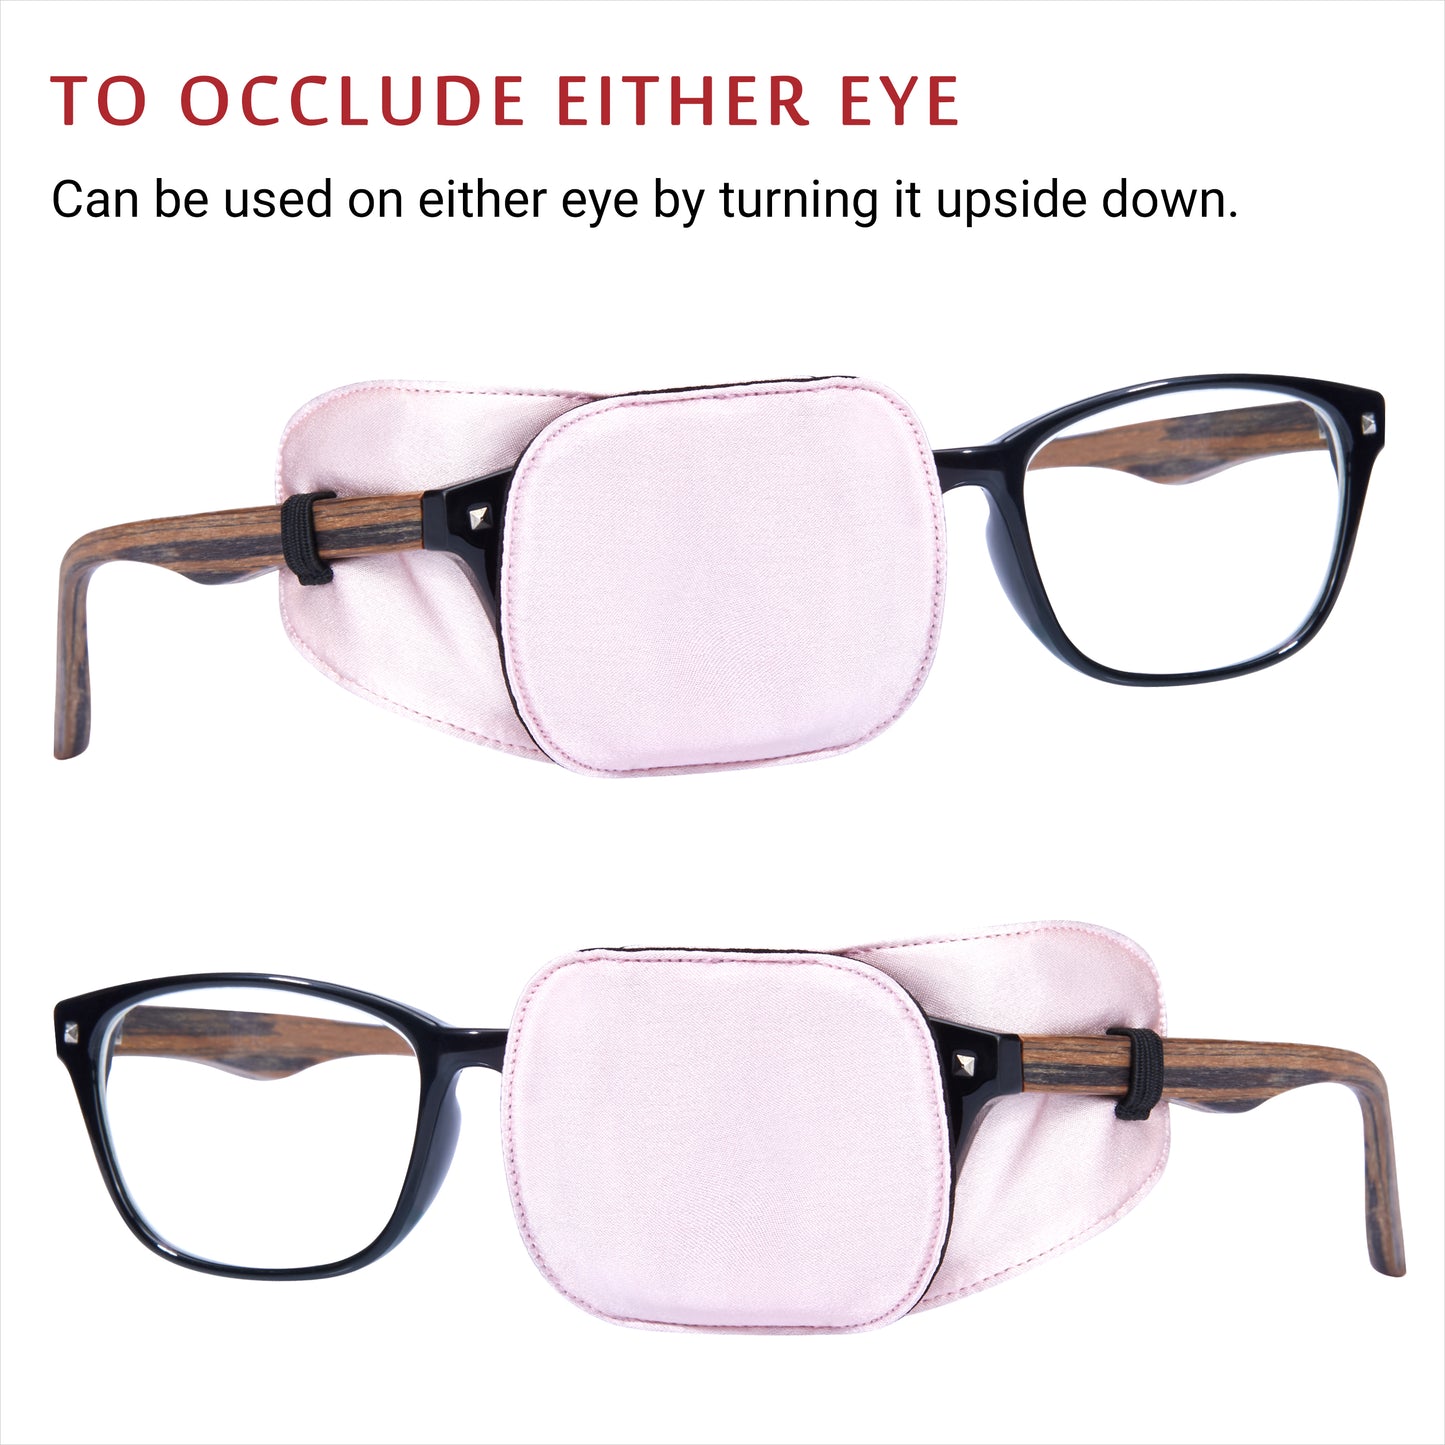 Silk Eye Patch for Glasses (Medium, English Rose Pink)